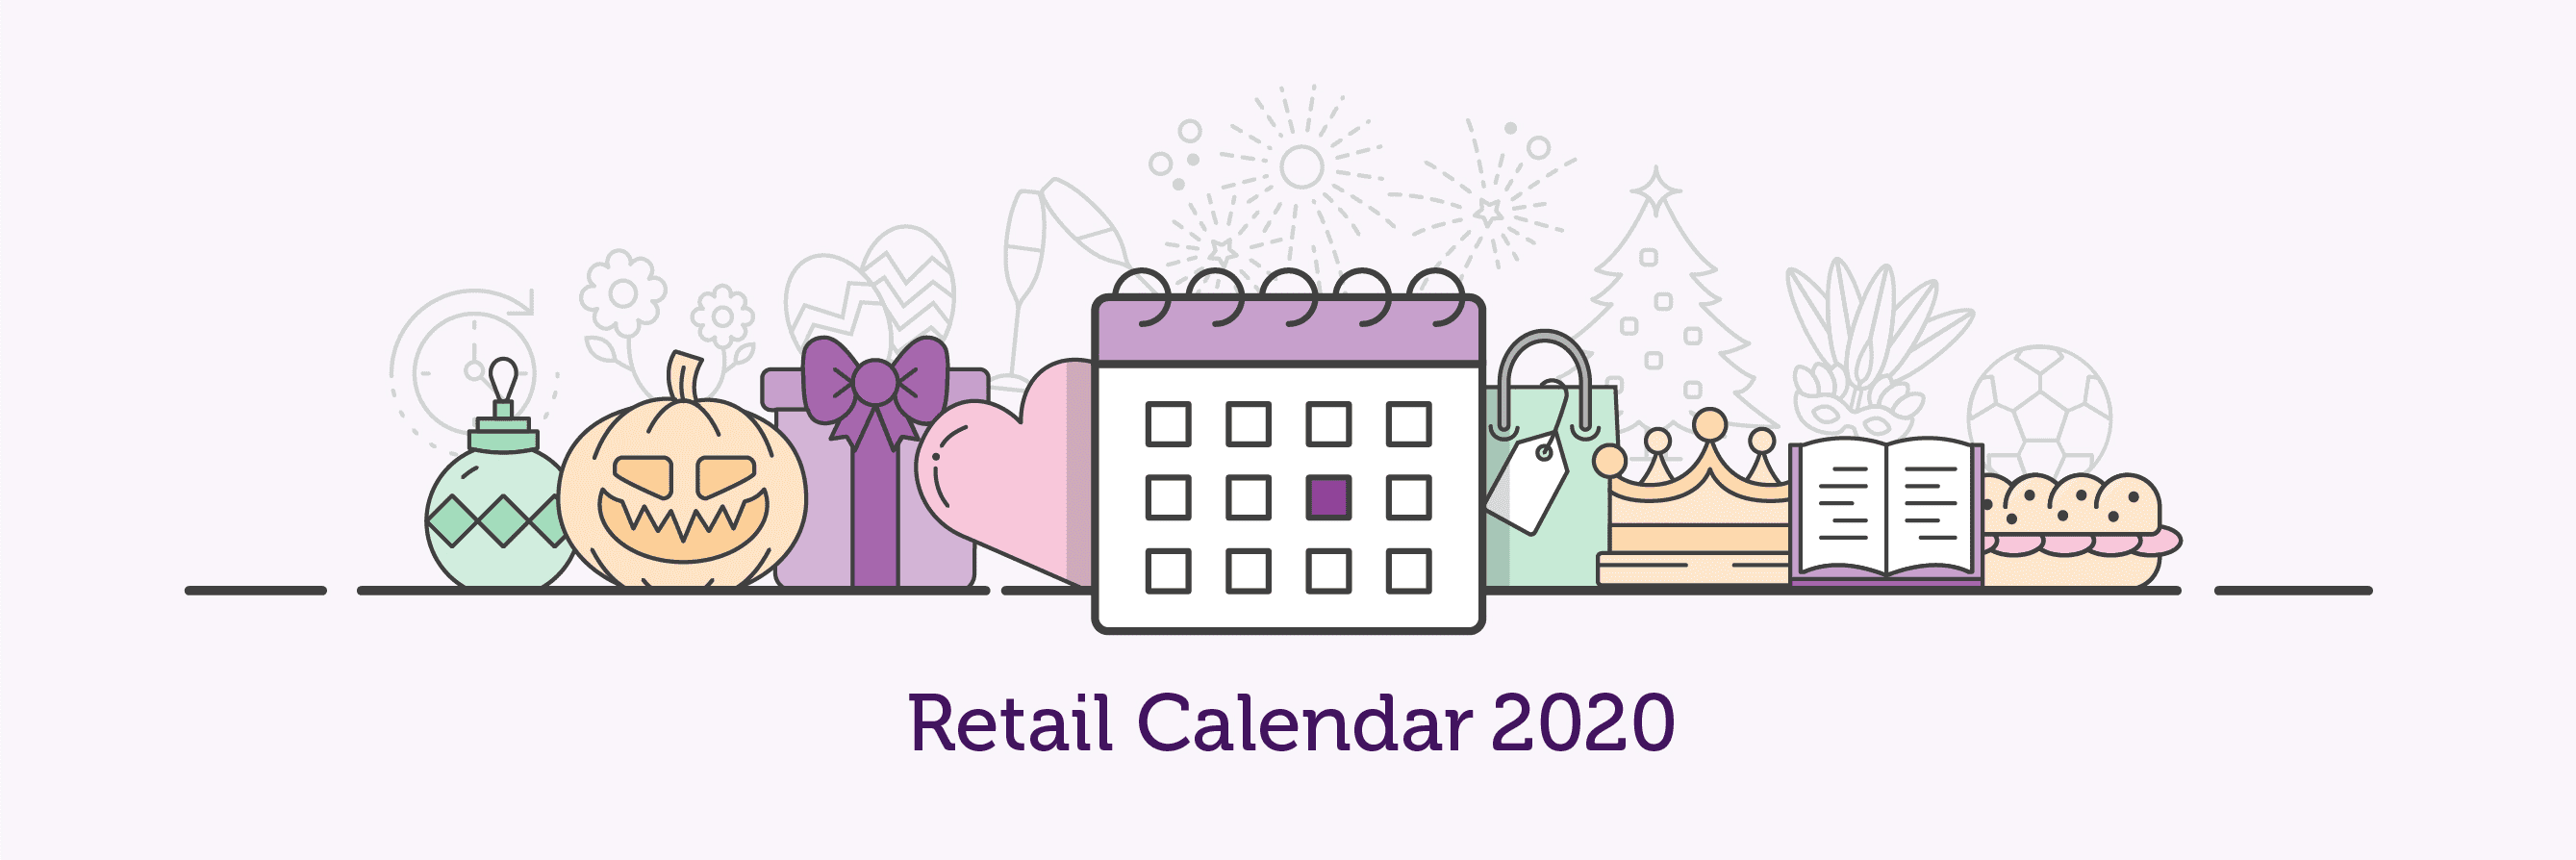 Retail Calendar 2020 banner image